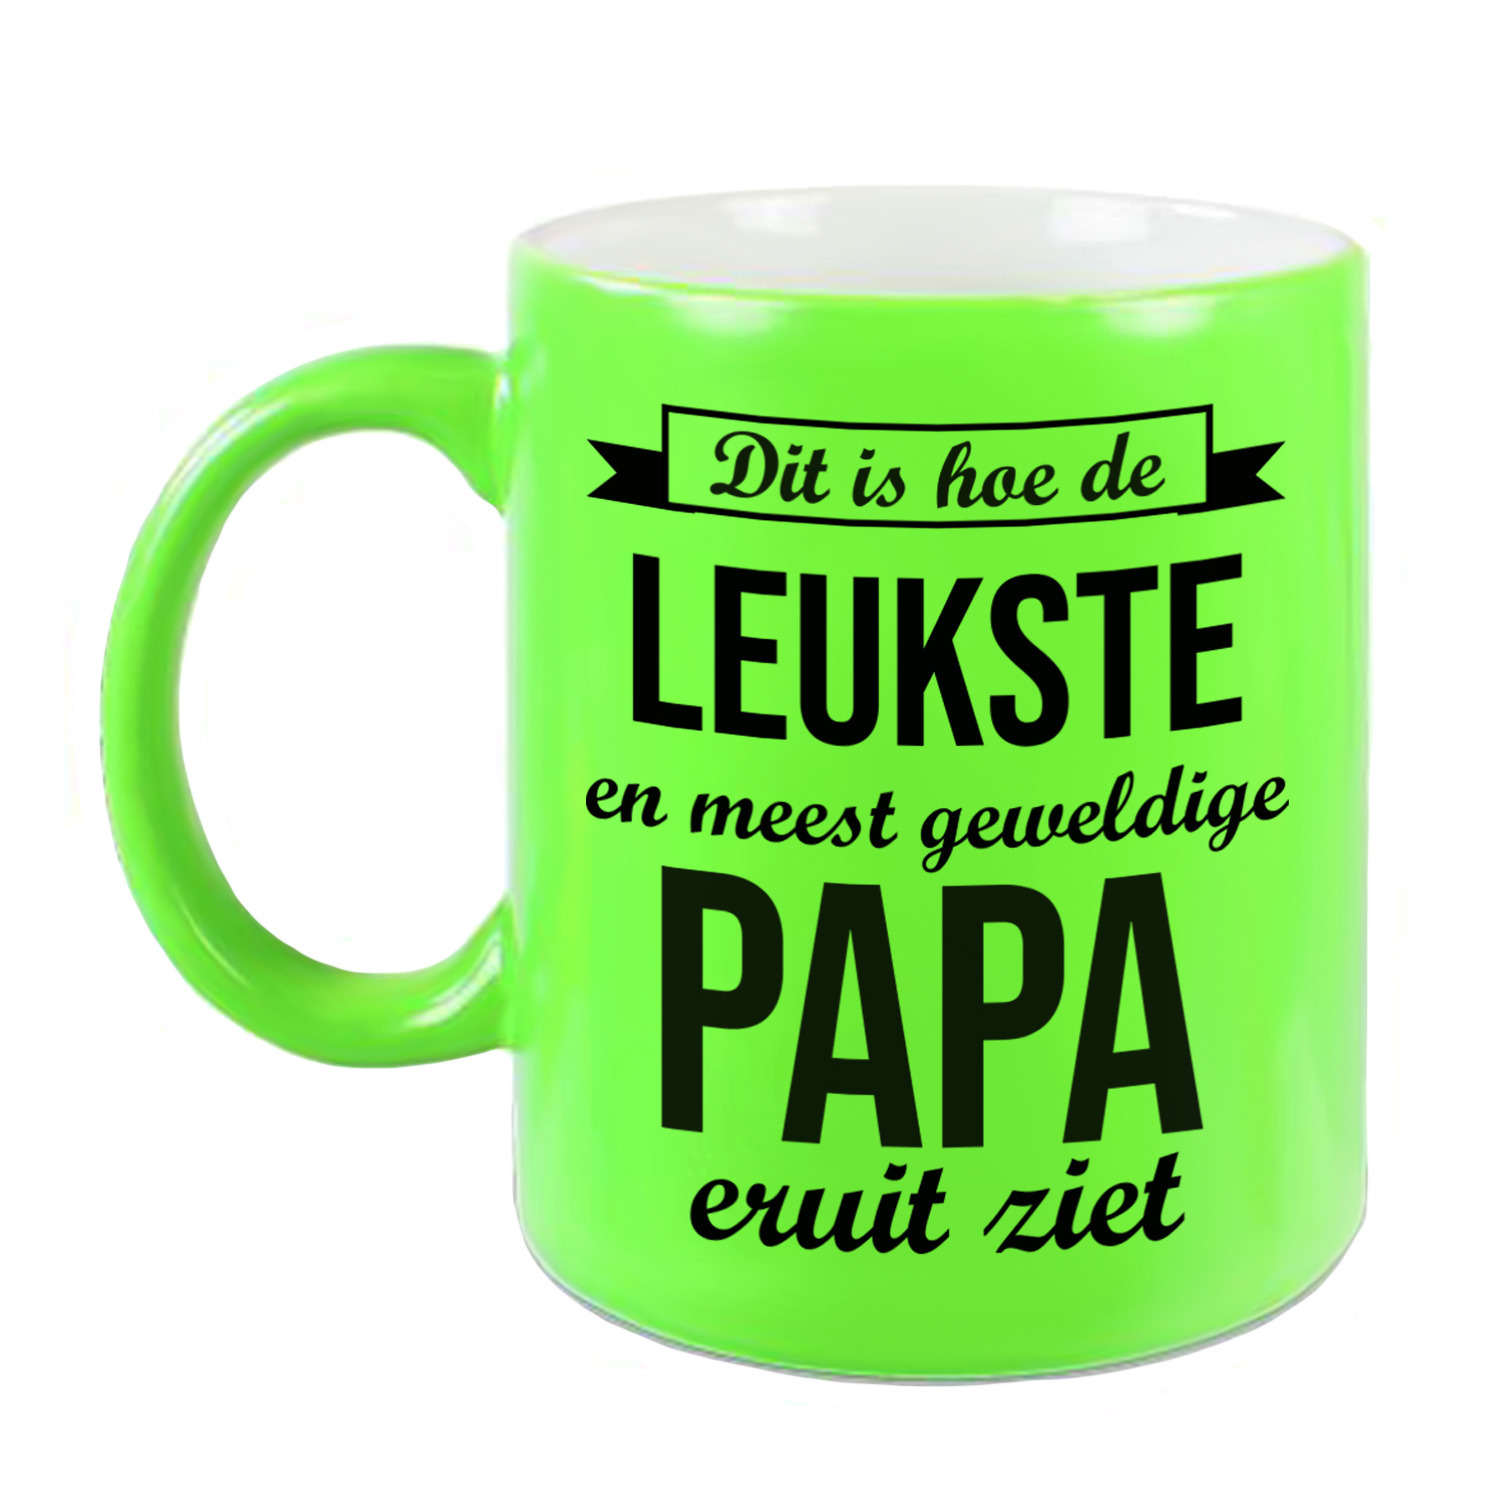 Leukste en meest geweldige papa cadeau koffiemok / theebeker neon groen 330 ml